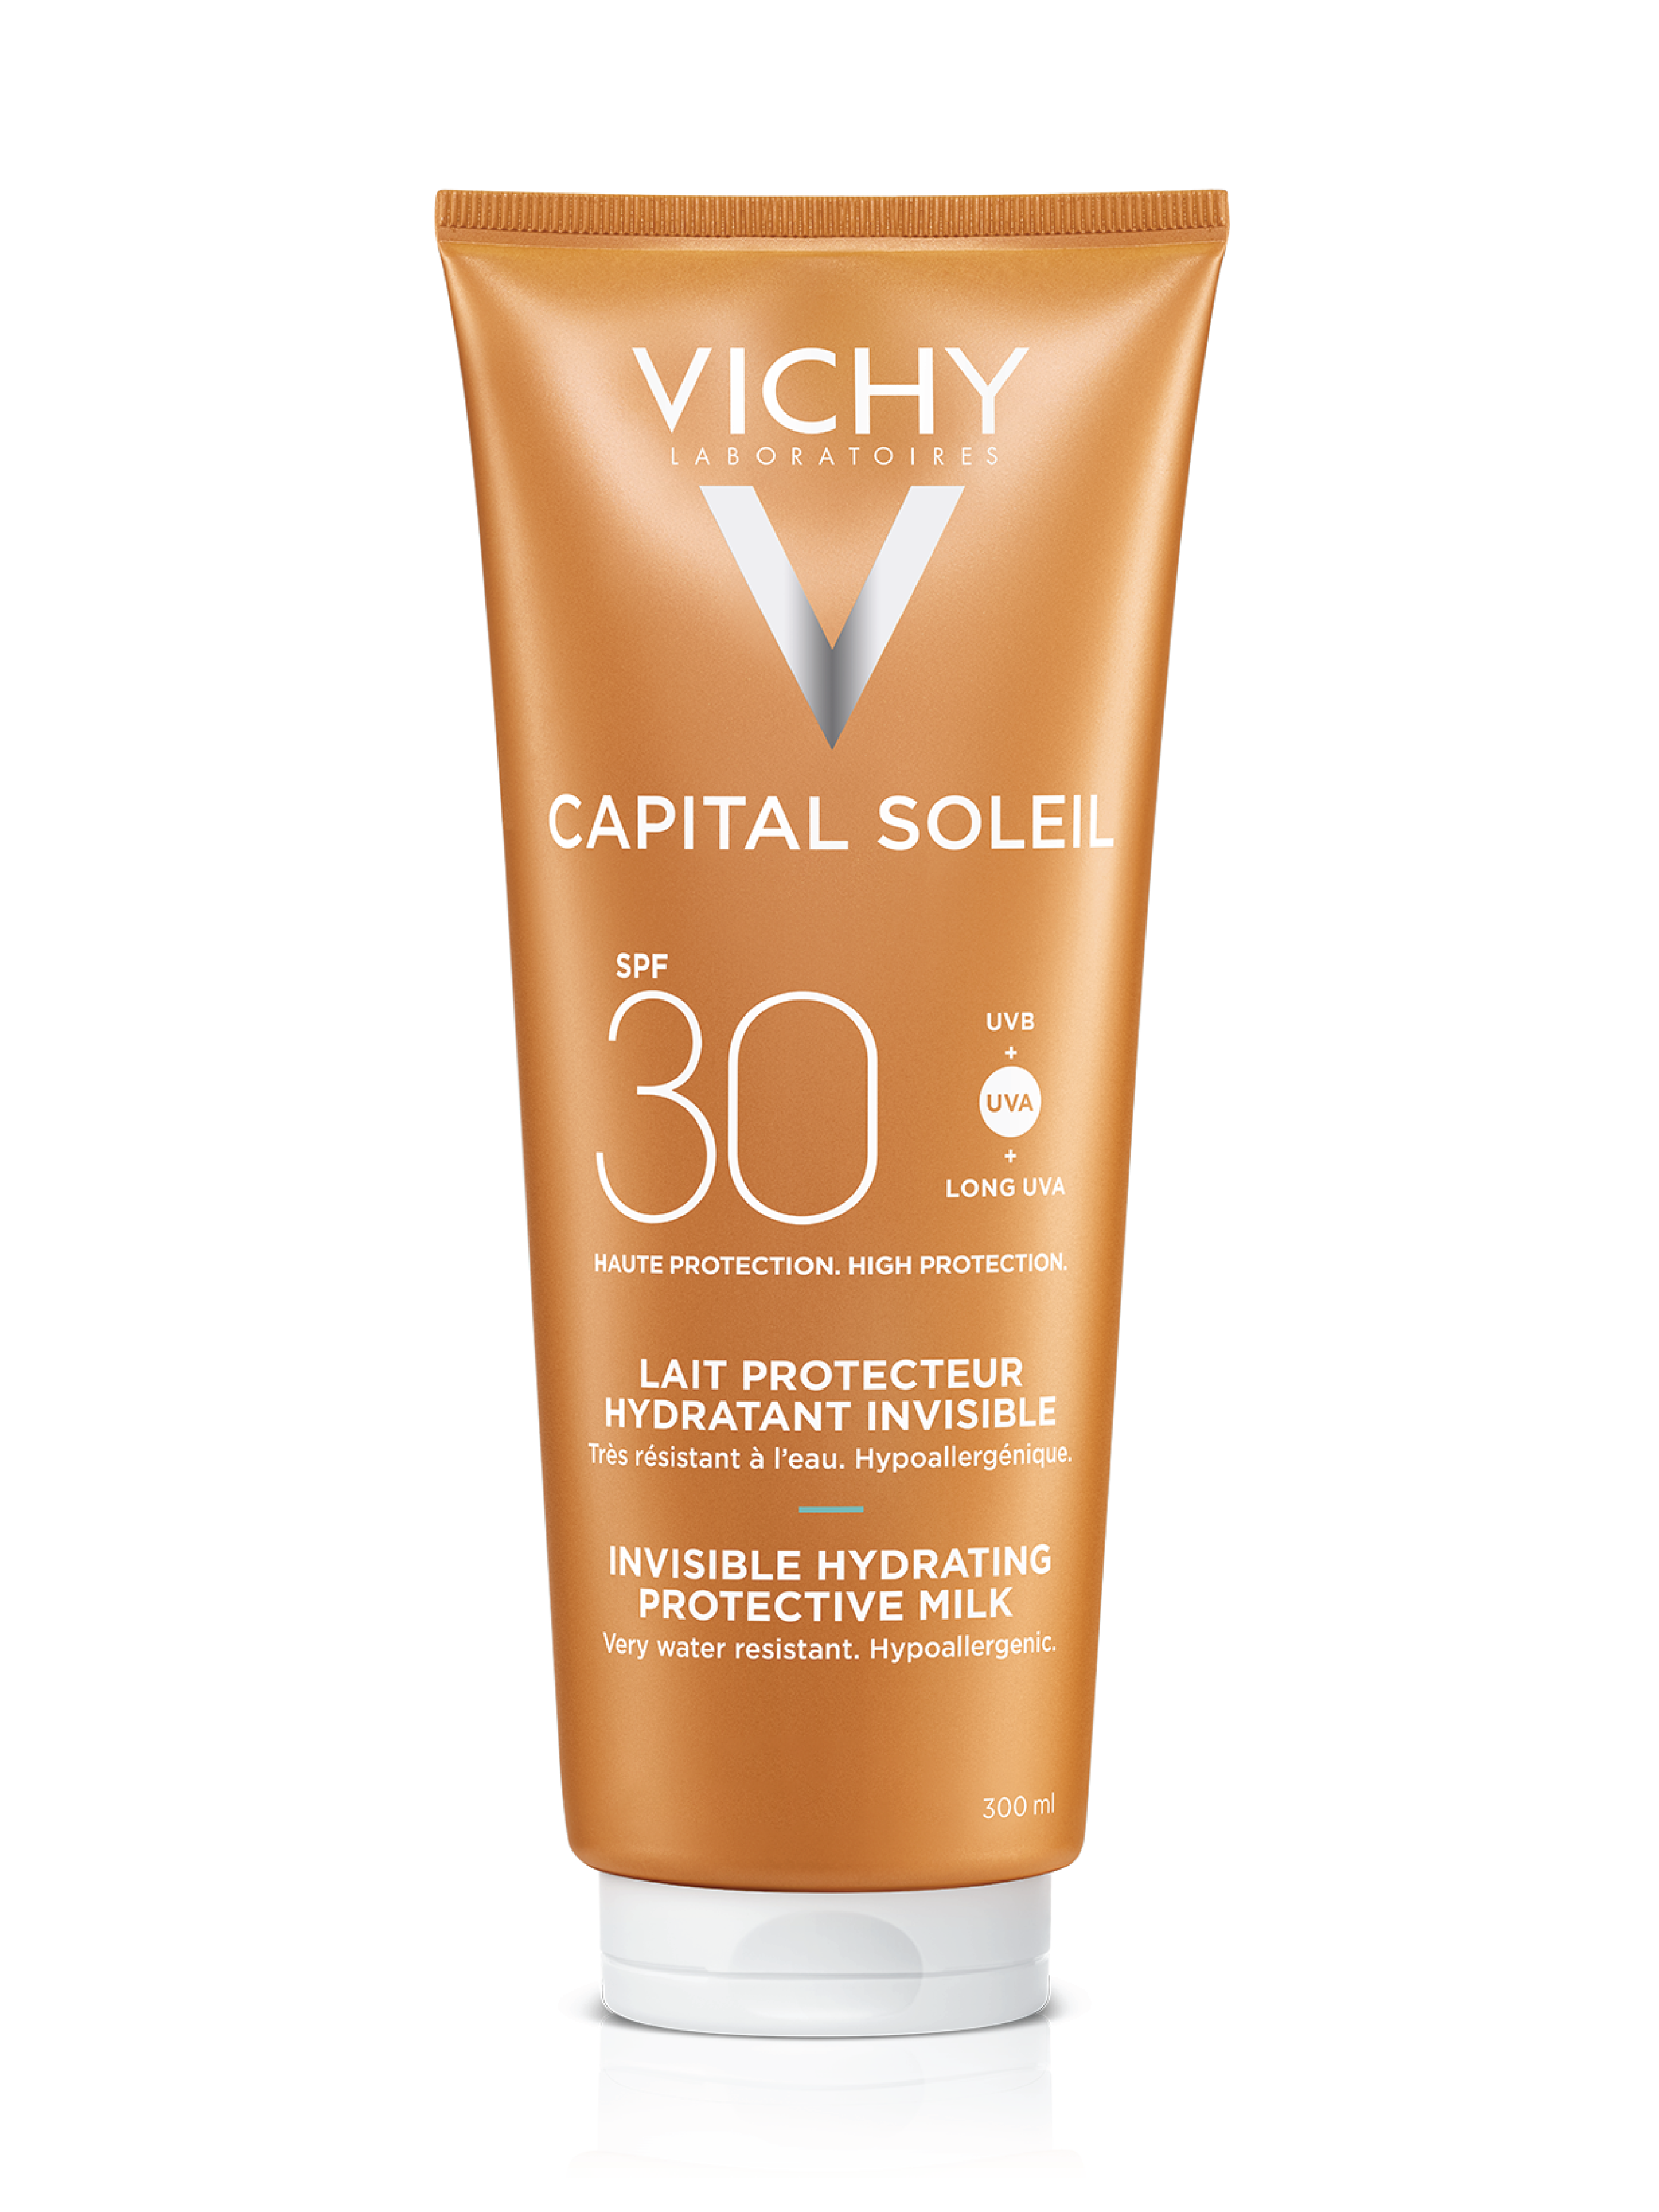 Vichy Capital Soleil Protective Milk, SPF 30, 300 ml